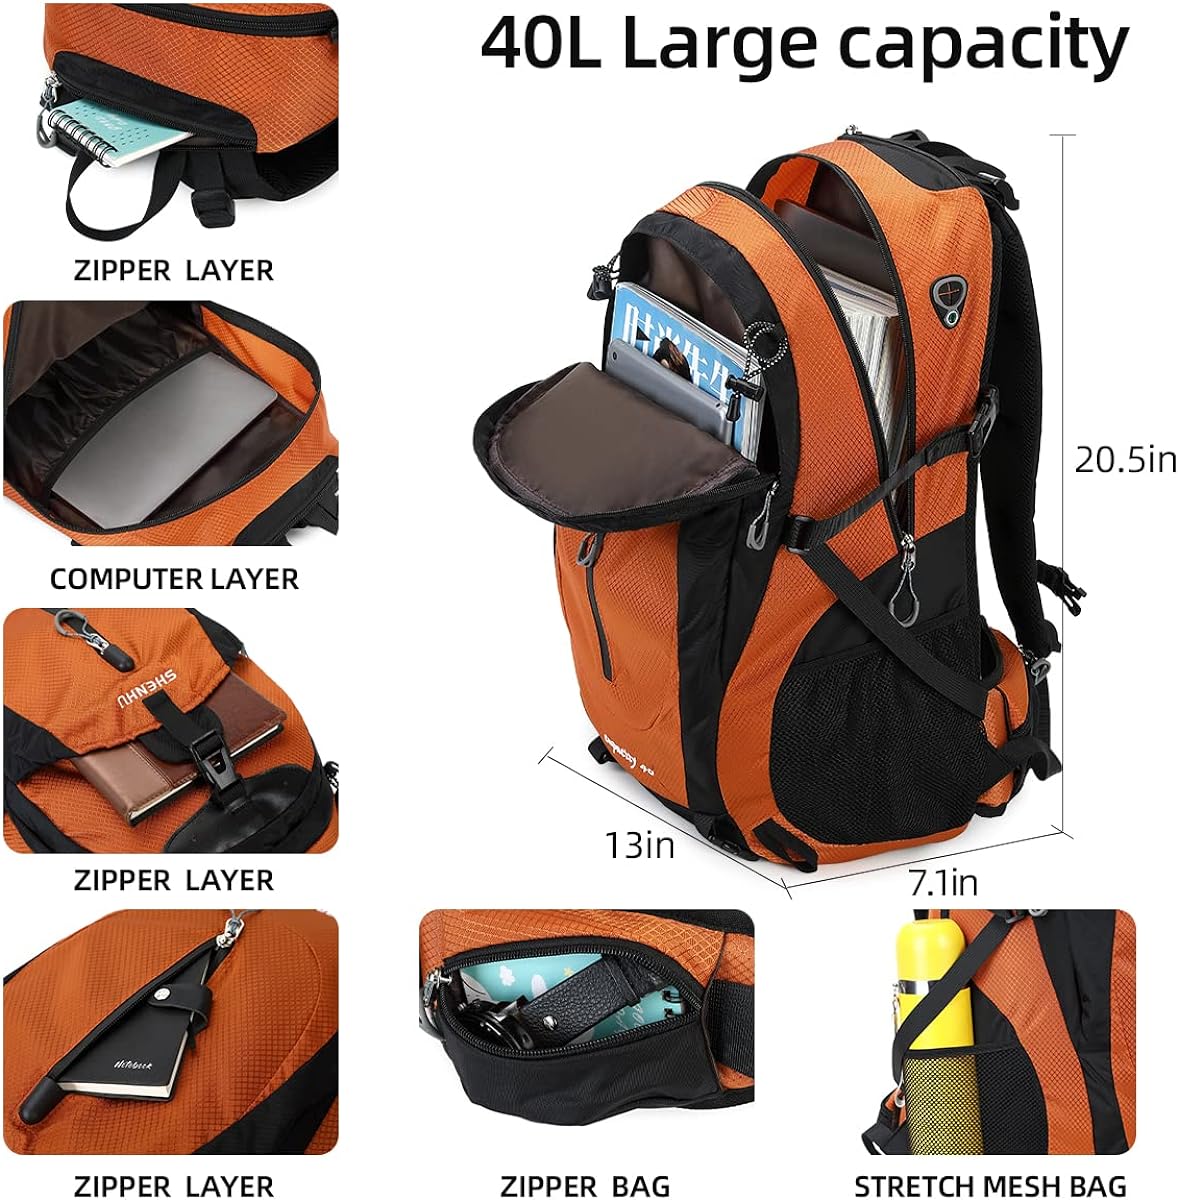 SHENHU Hiking Backpack 40L Waterproof Daypack Lightweight Outdoor Camping Backpack for Men Women Sport Trekking